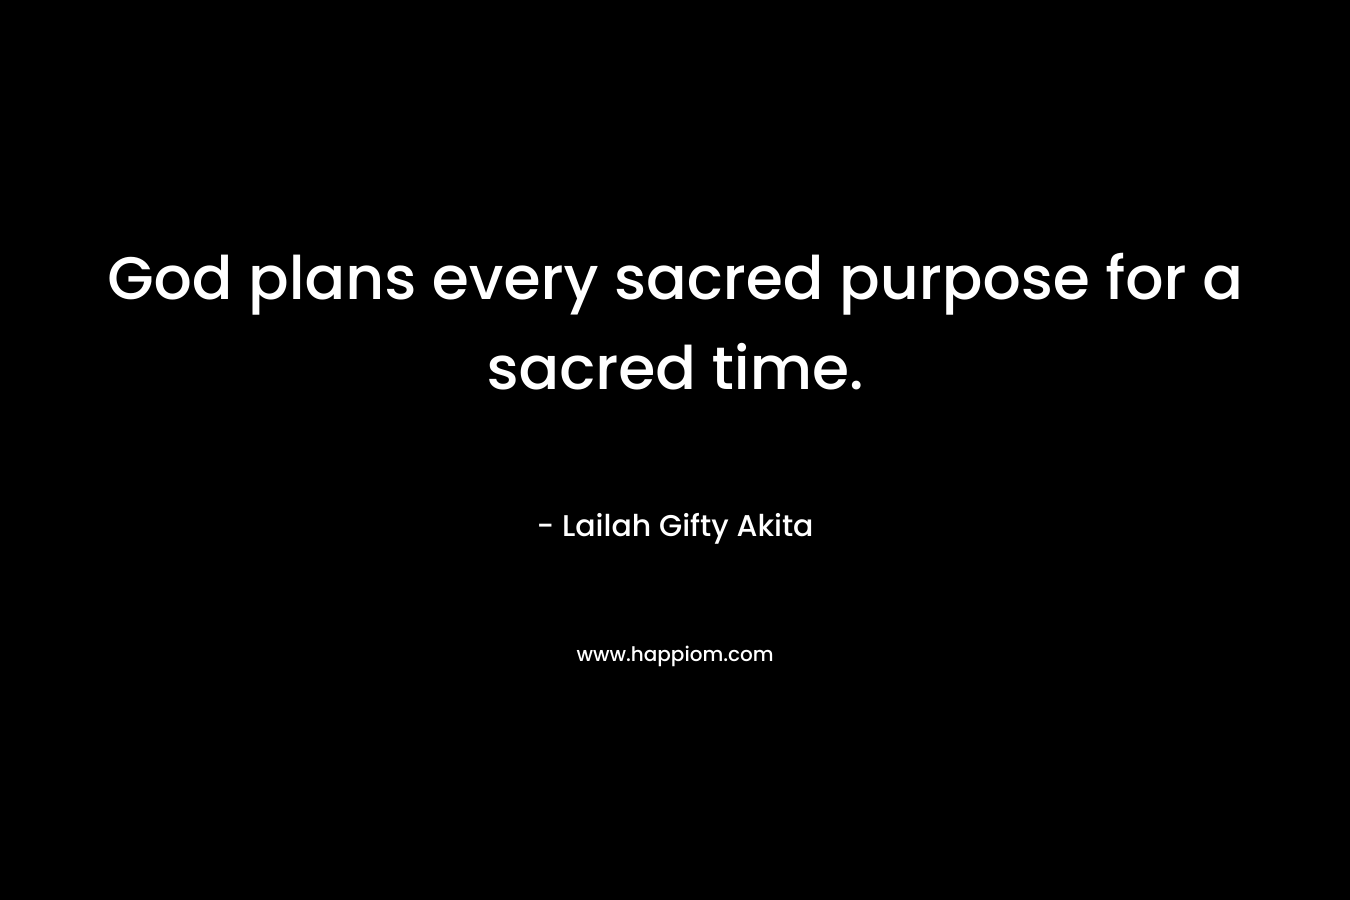 God plans every sacred purpose for a sacred time.